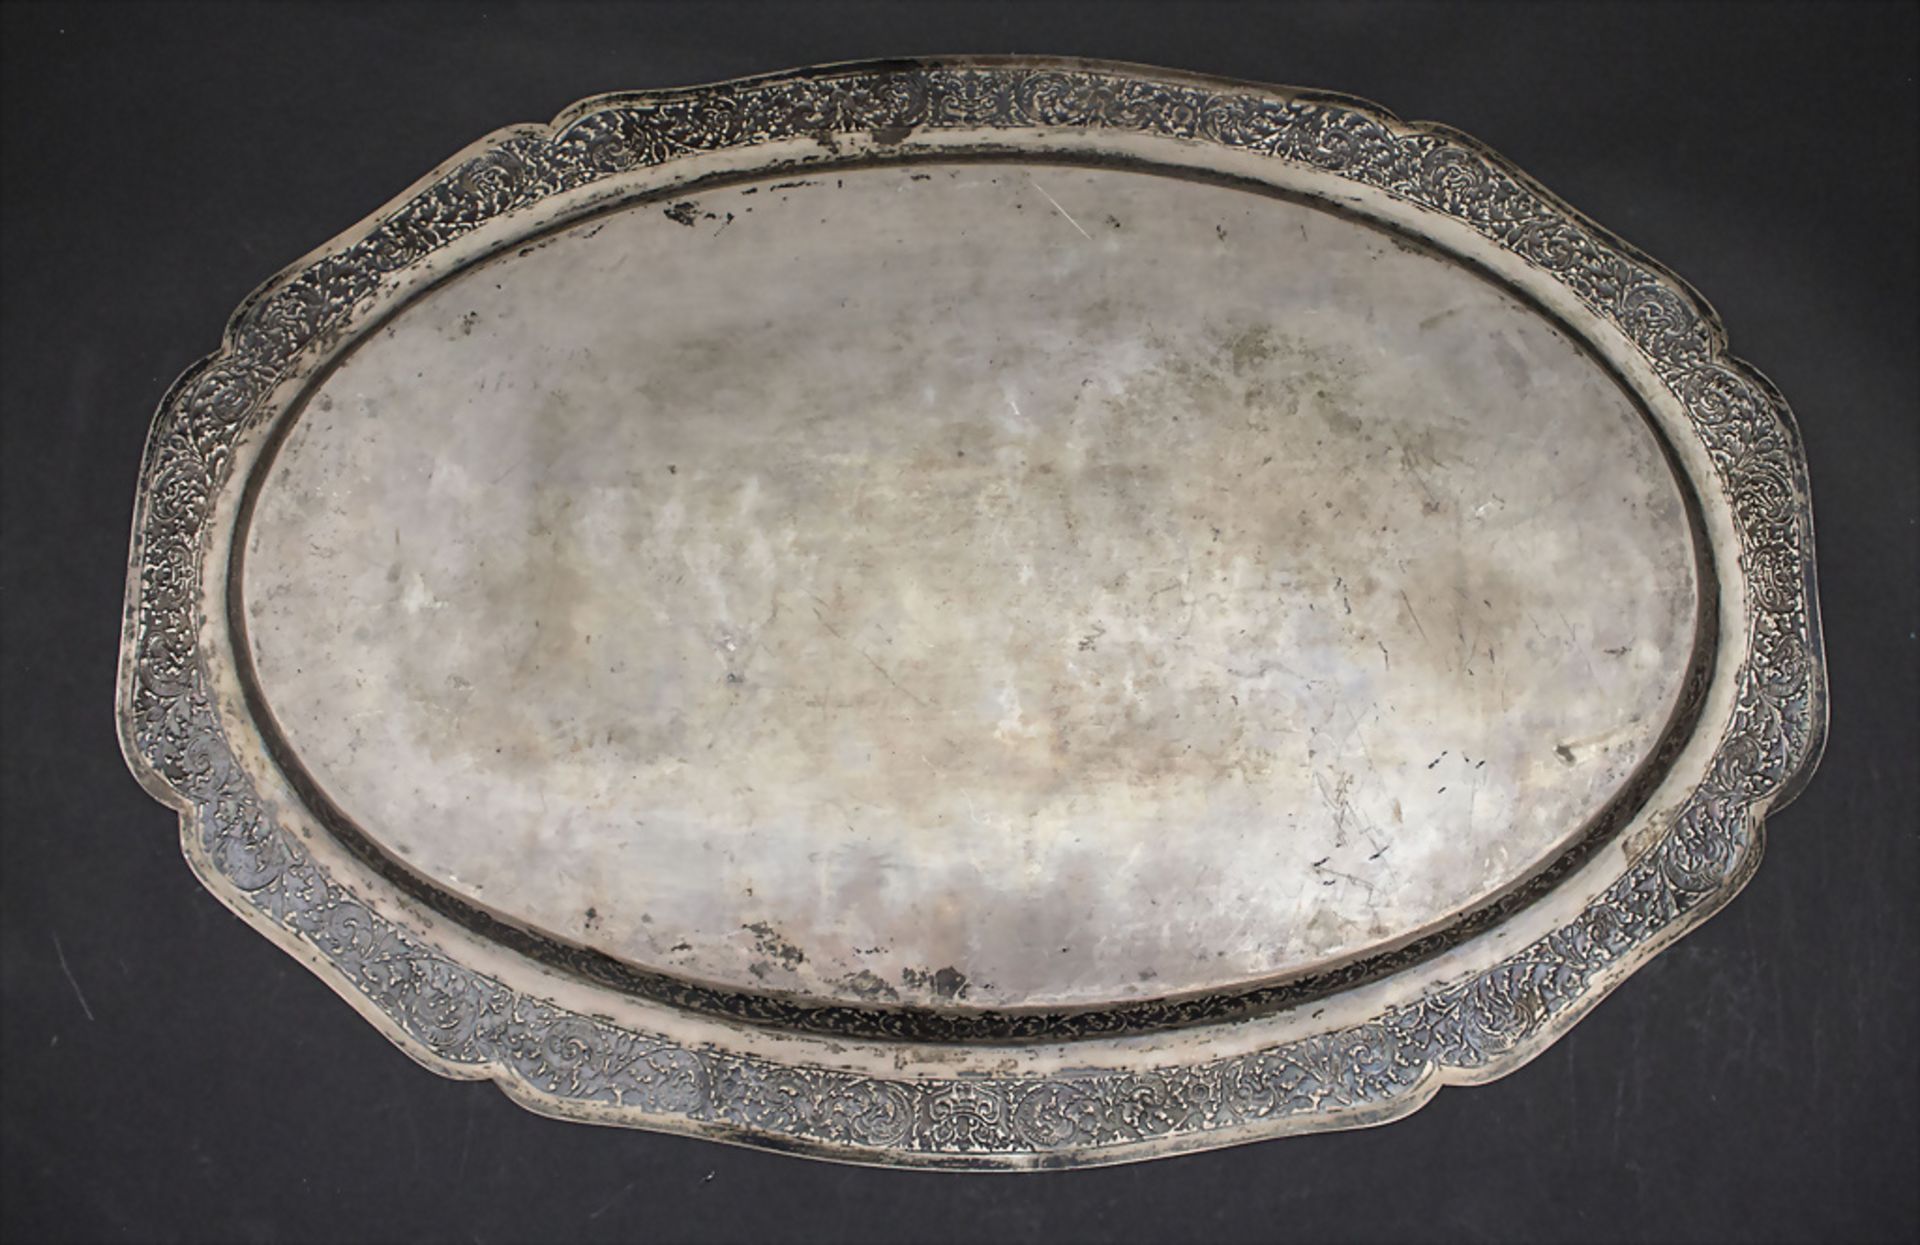 Tee-Tablett / A large silver tray, Kambodscha/Cambodia, 20. Jh. - Bild 2 aus 3